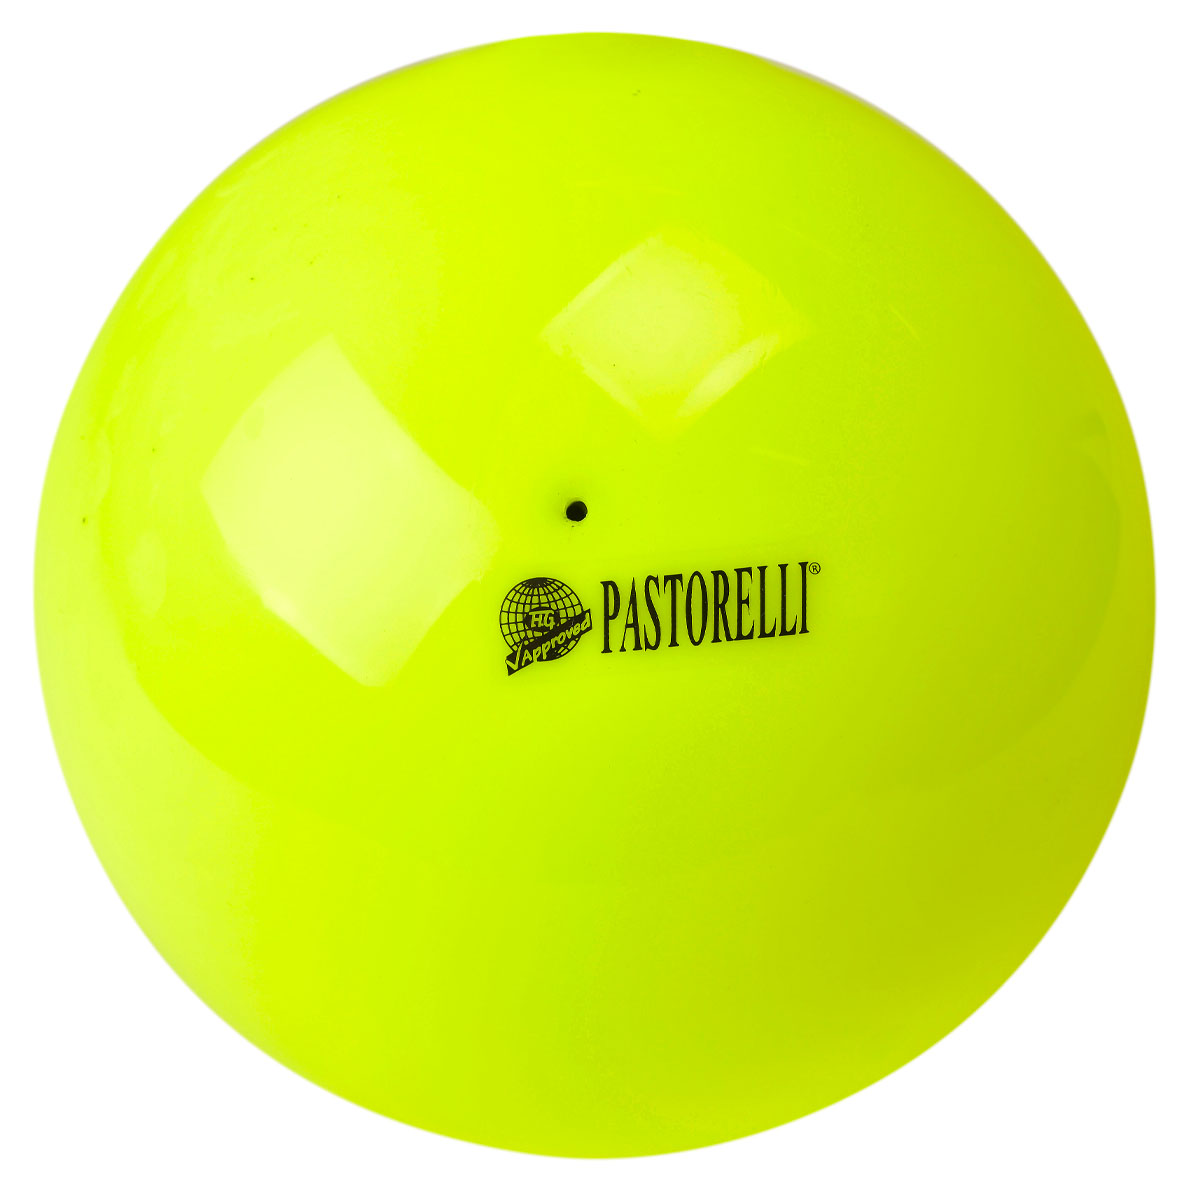 New Generation ball 18 cm